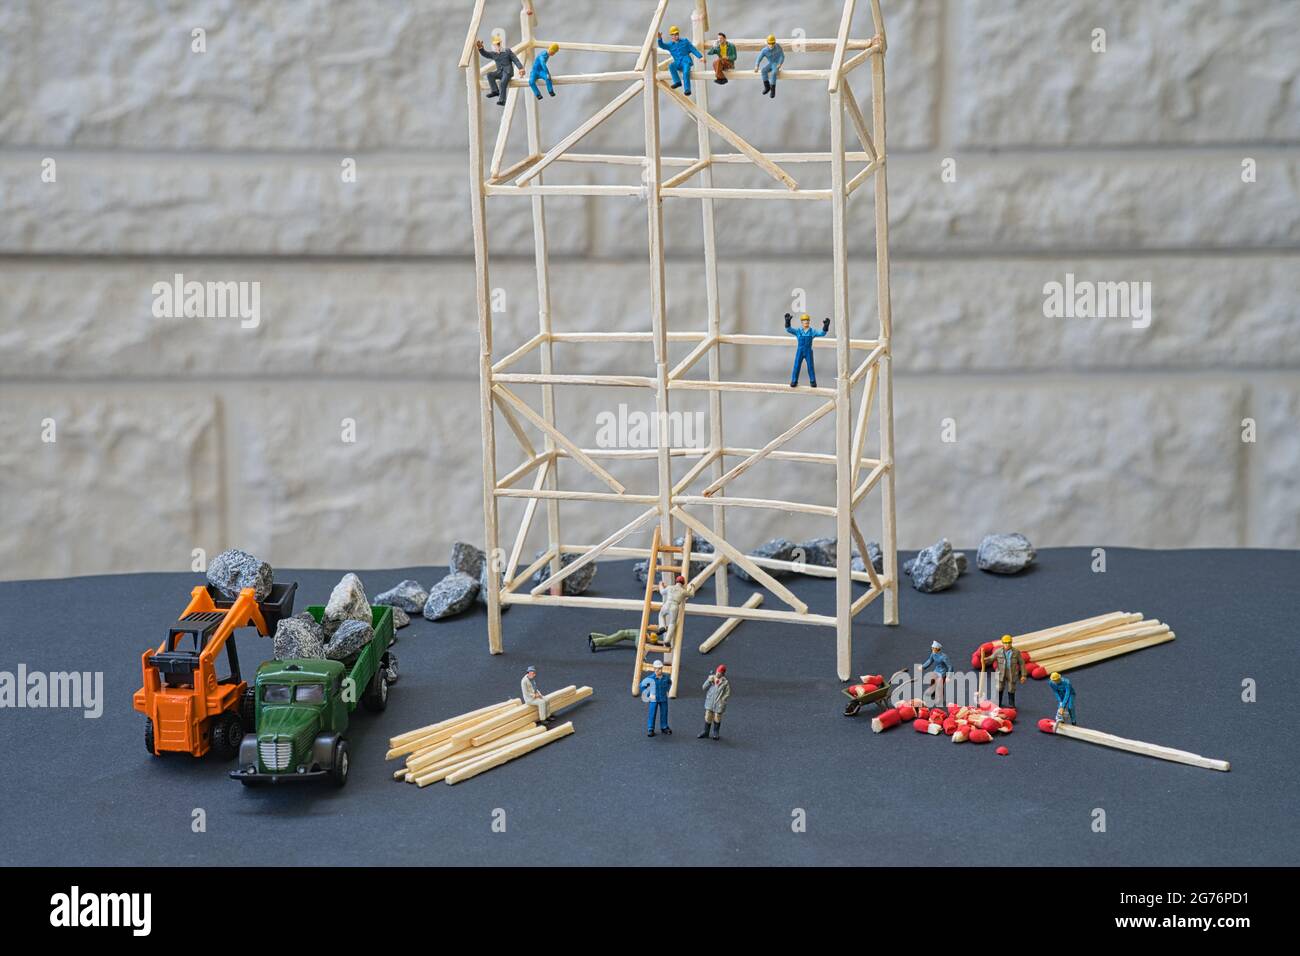 Miniature Construction Workers Building Plans Stock Photo 367707245